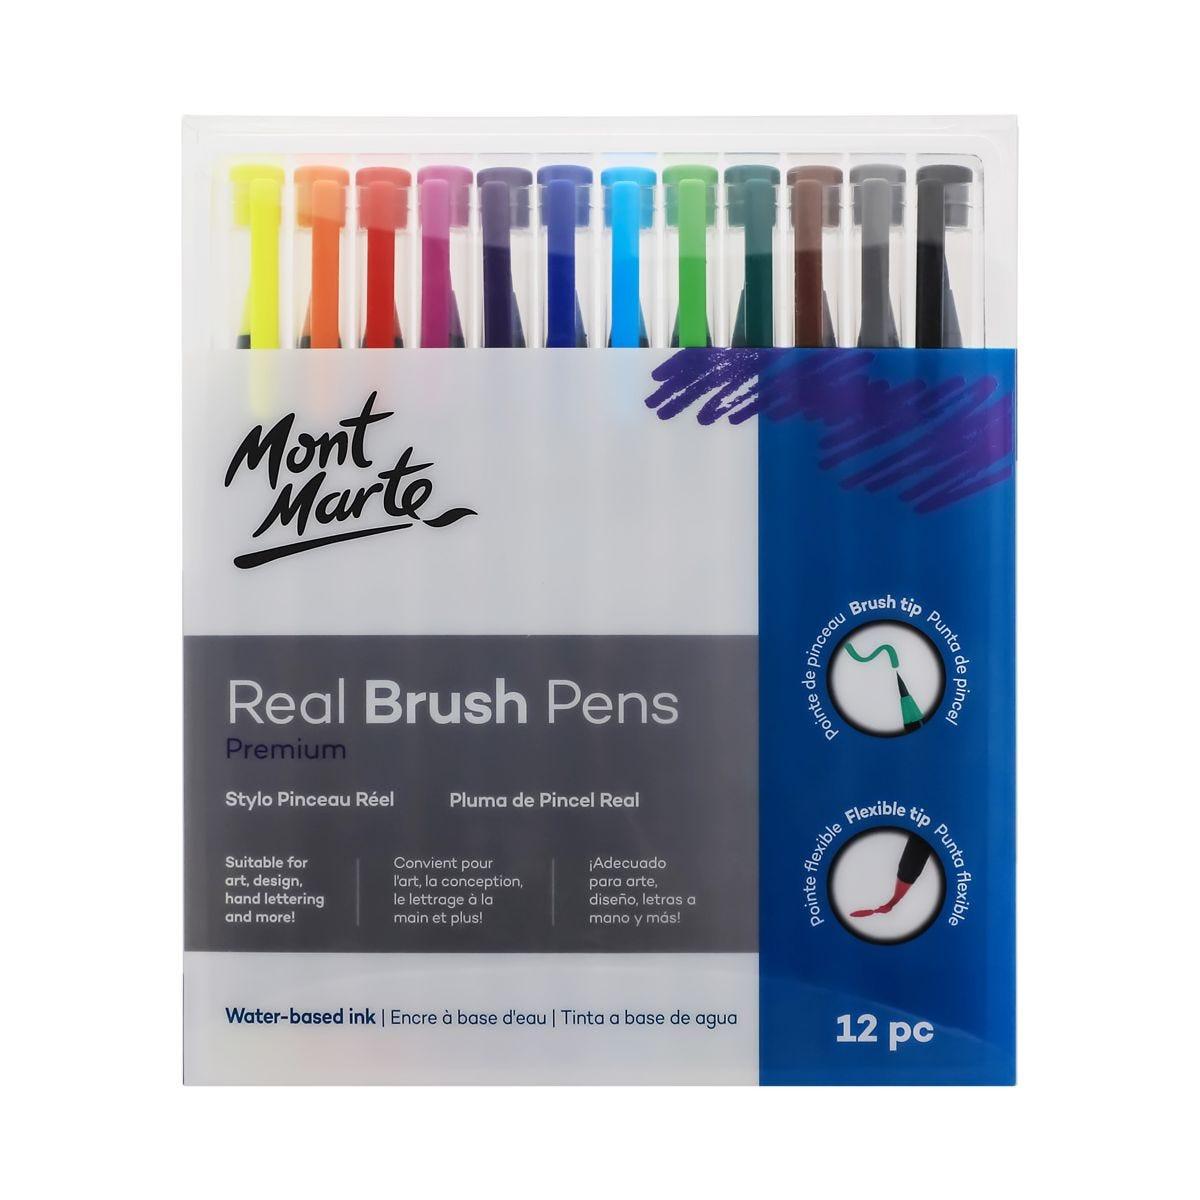 Mont Marte Real Brush Pens 12pcs.